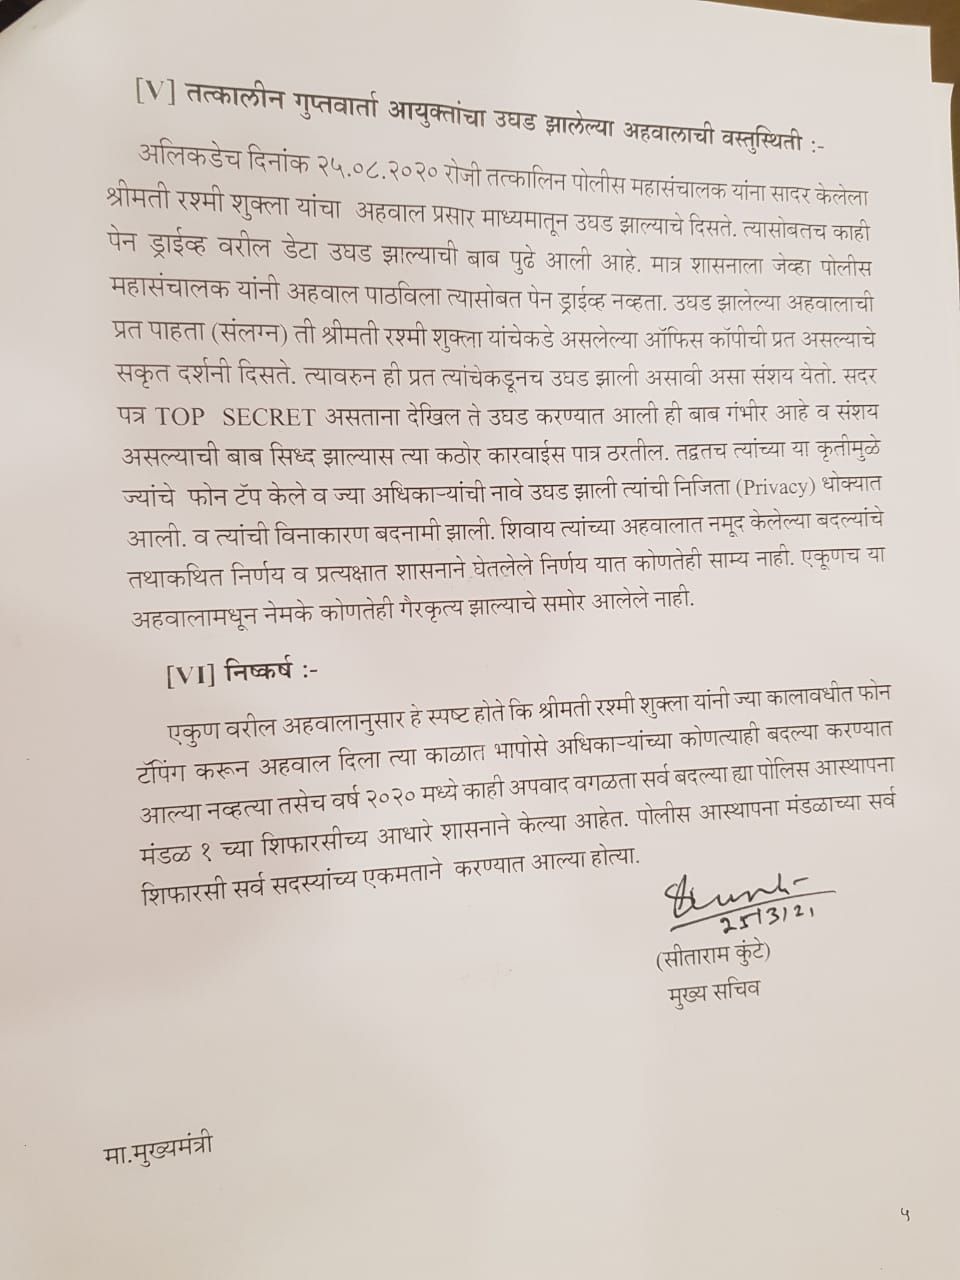 chief secretary letter claims rashmi shukla apologies in phone tapping case - Satya Hindi